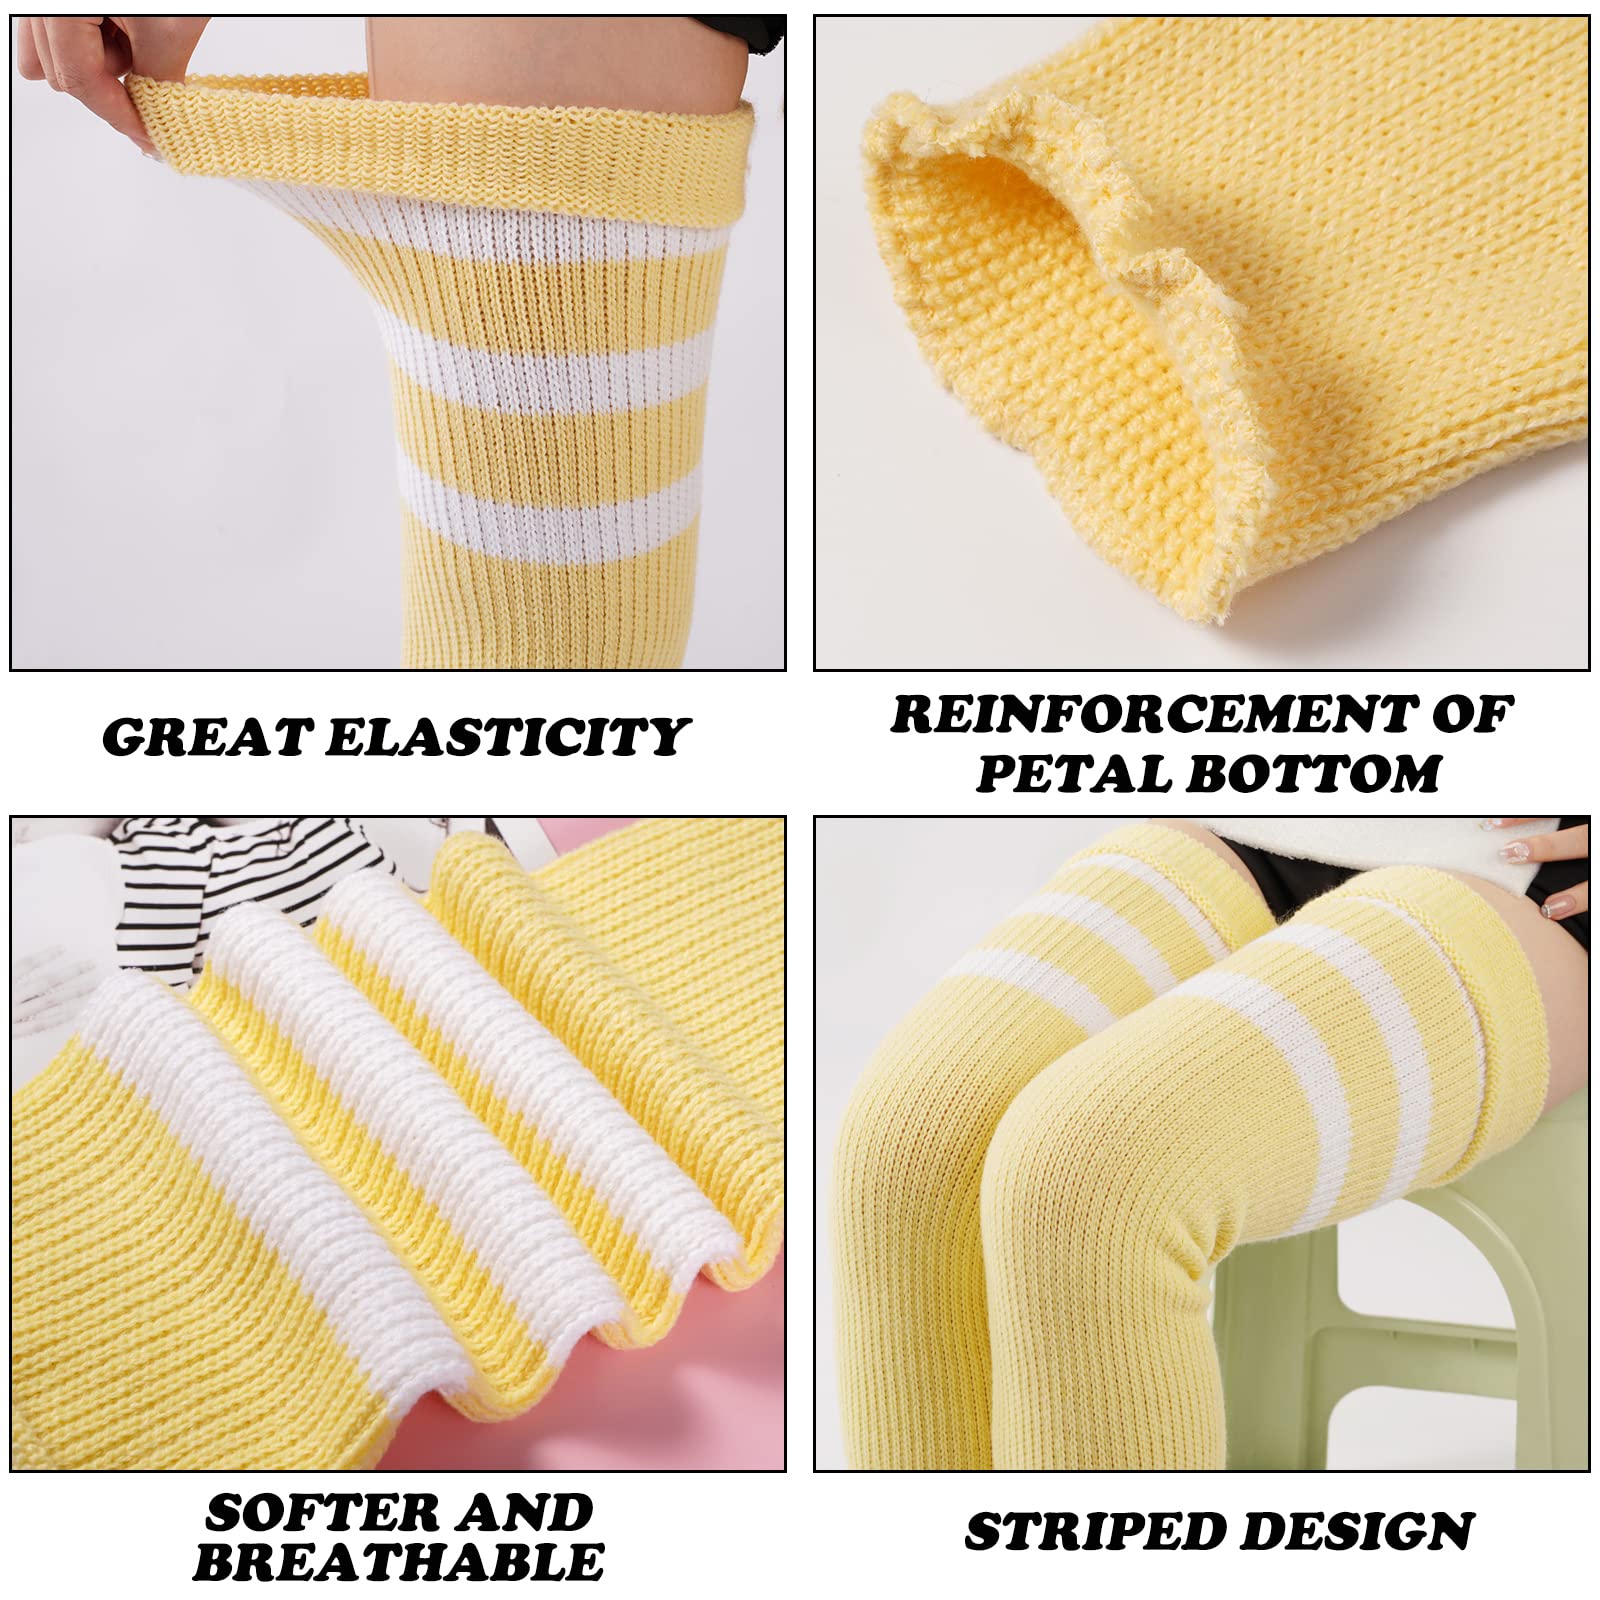 Plus Size Leg Warmers for Women-Cream Yellow & White